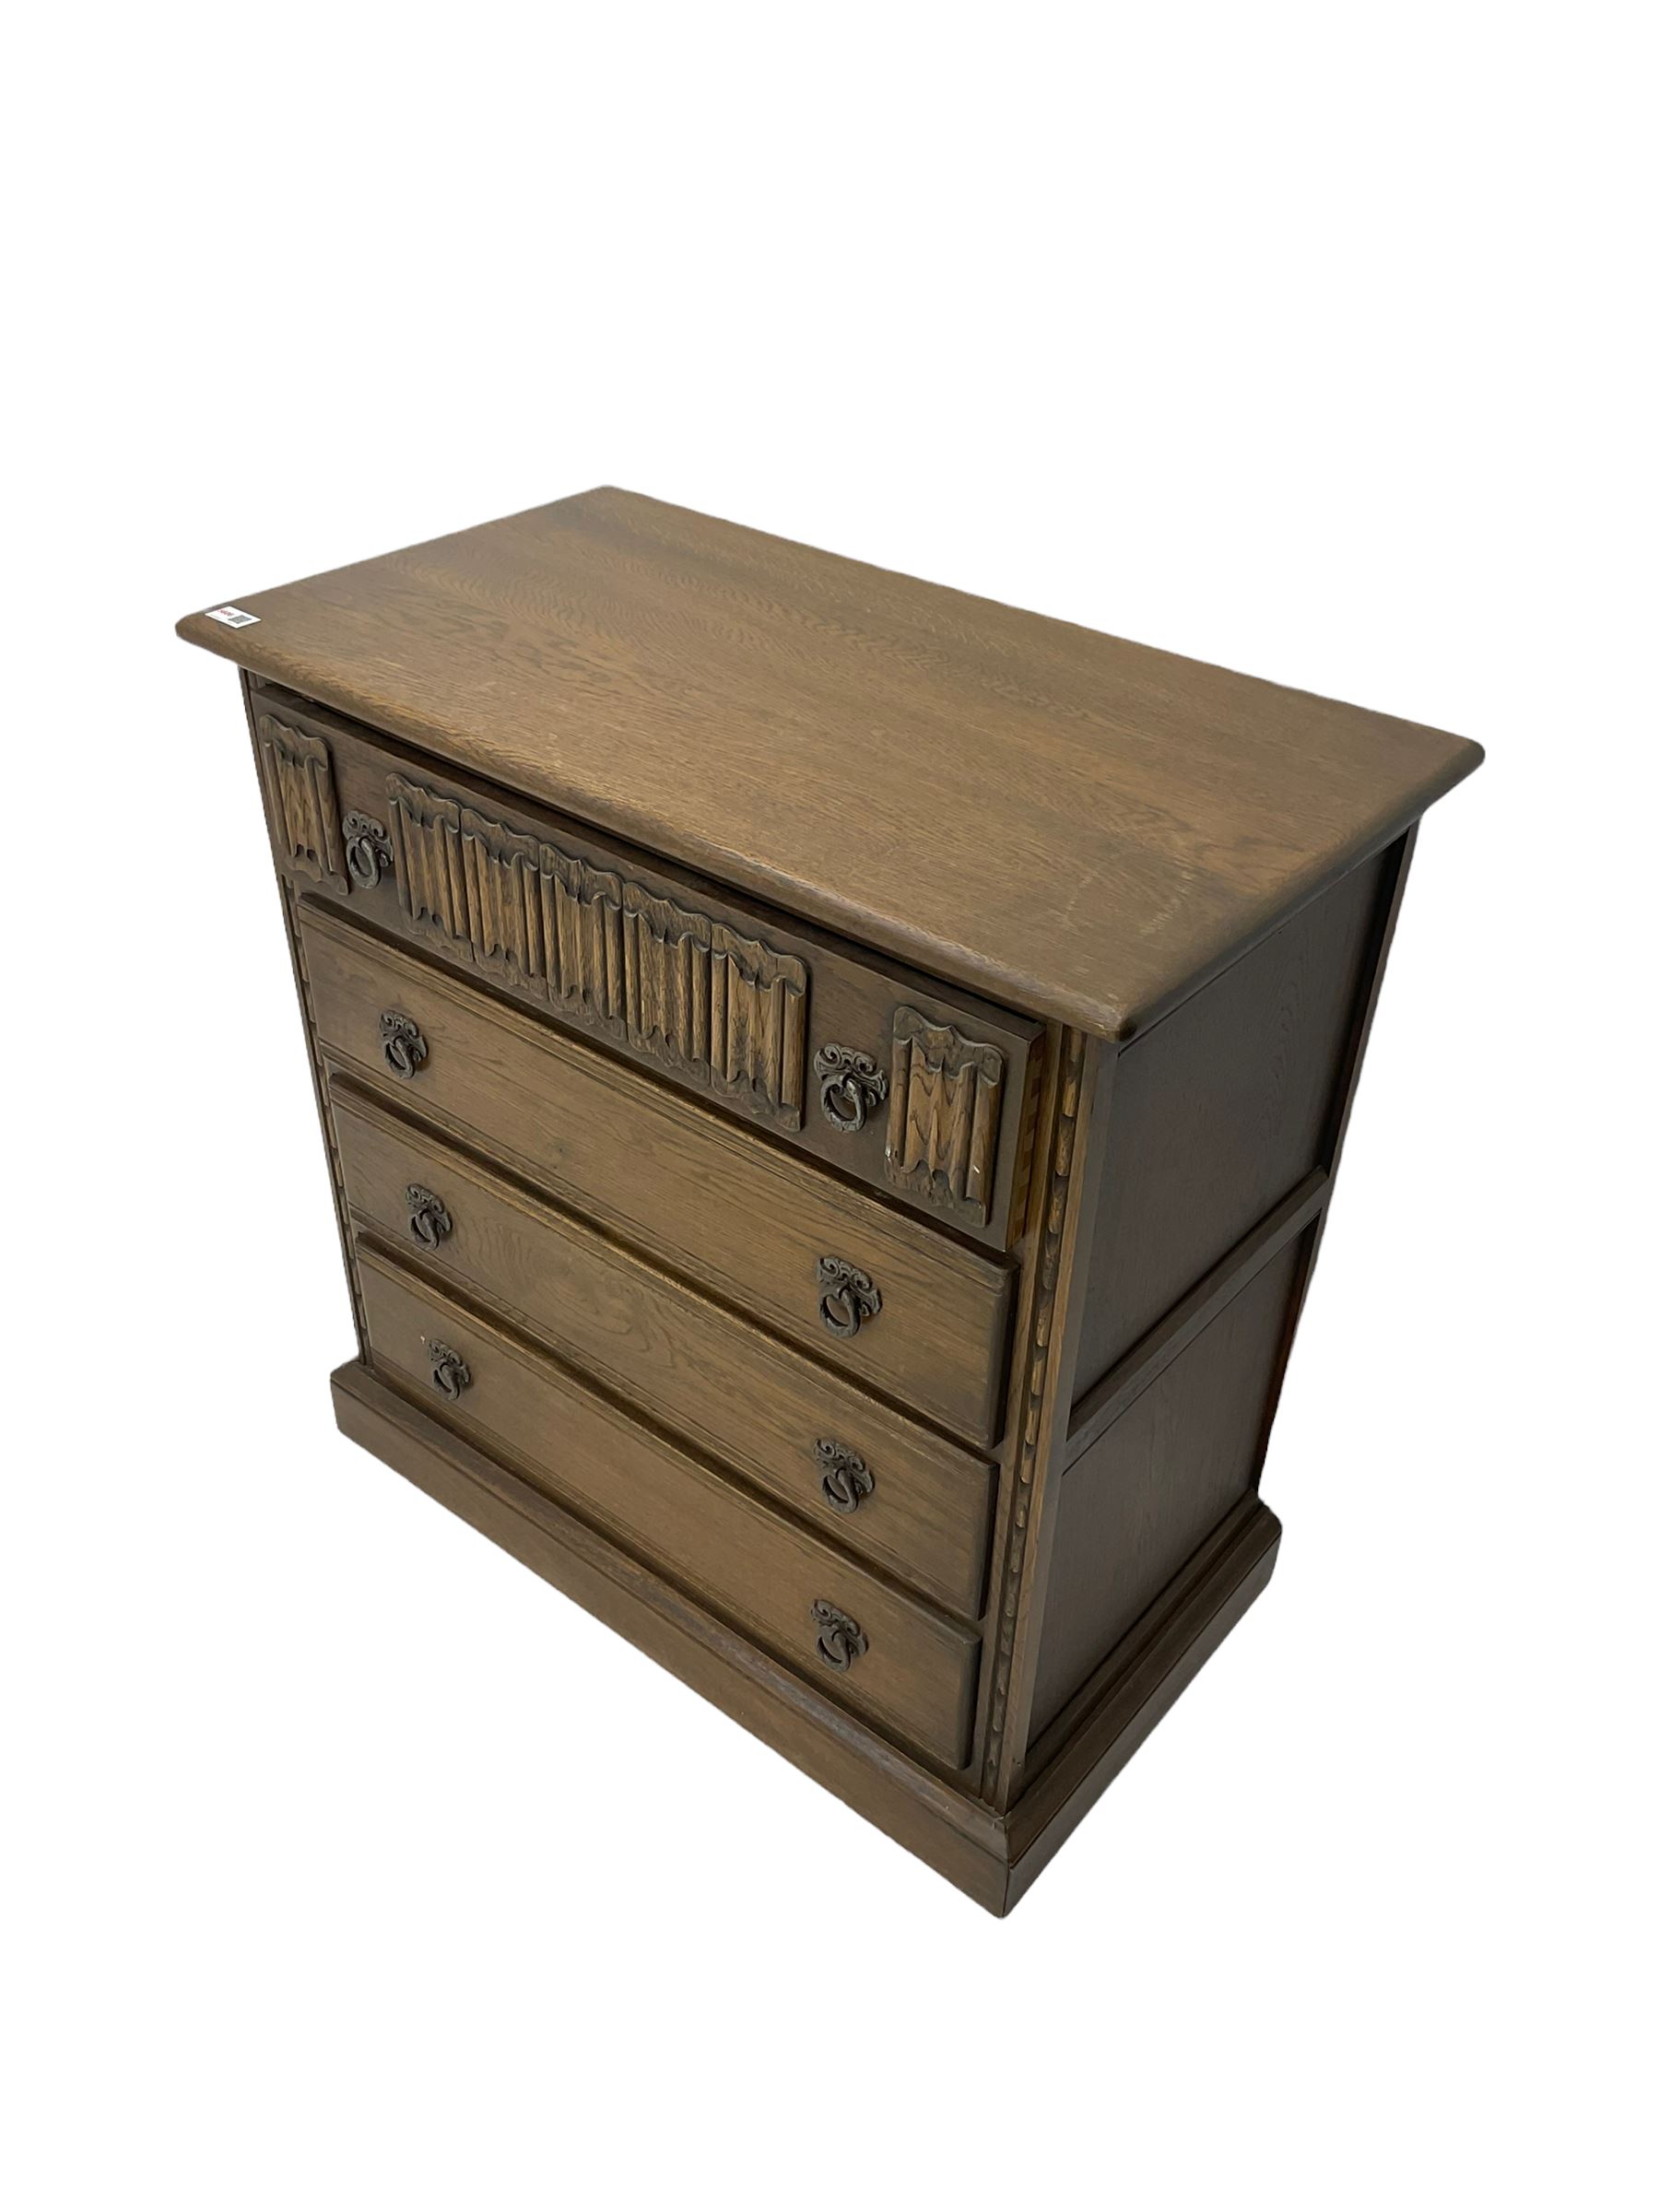 Medium oak chest of drawers - Image 2 of 2